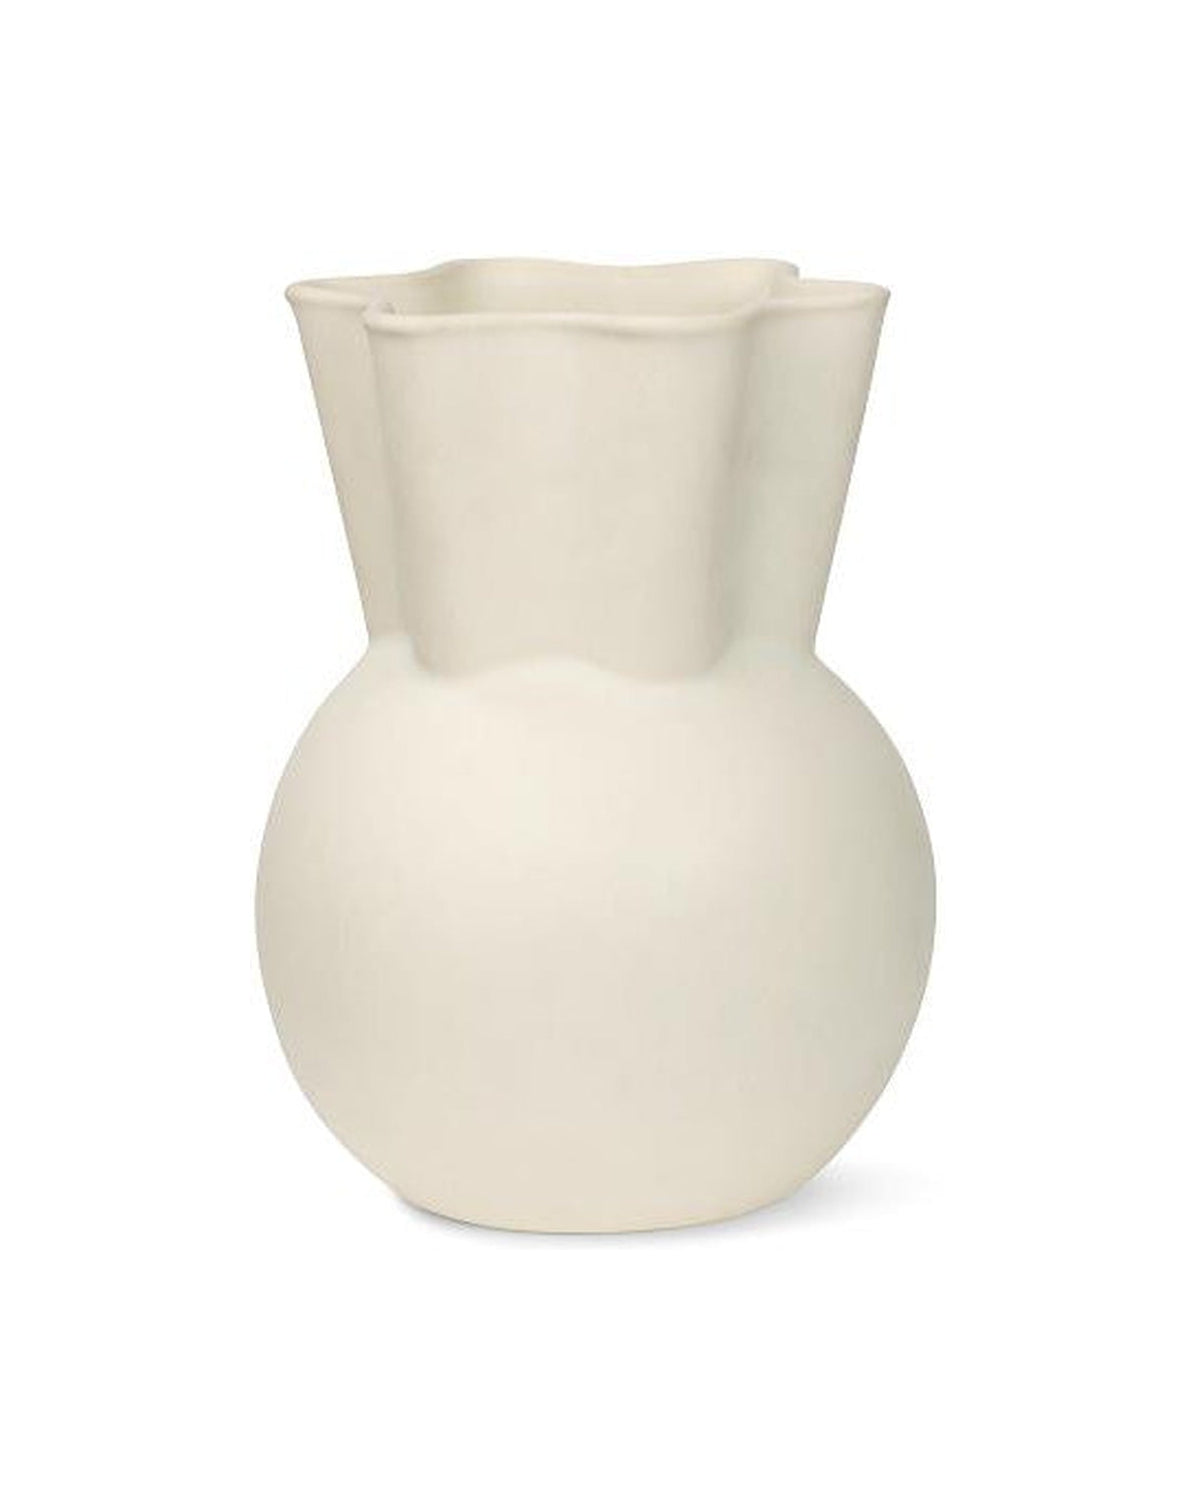 Federkopenhagen -Vase mit gekrümmtem Oberteil, 20 cm